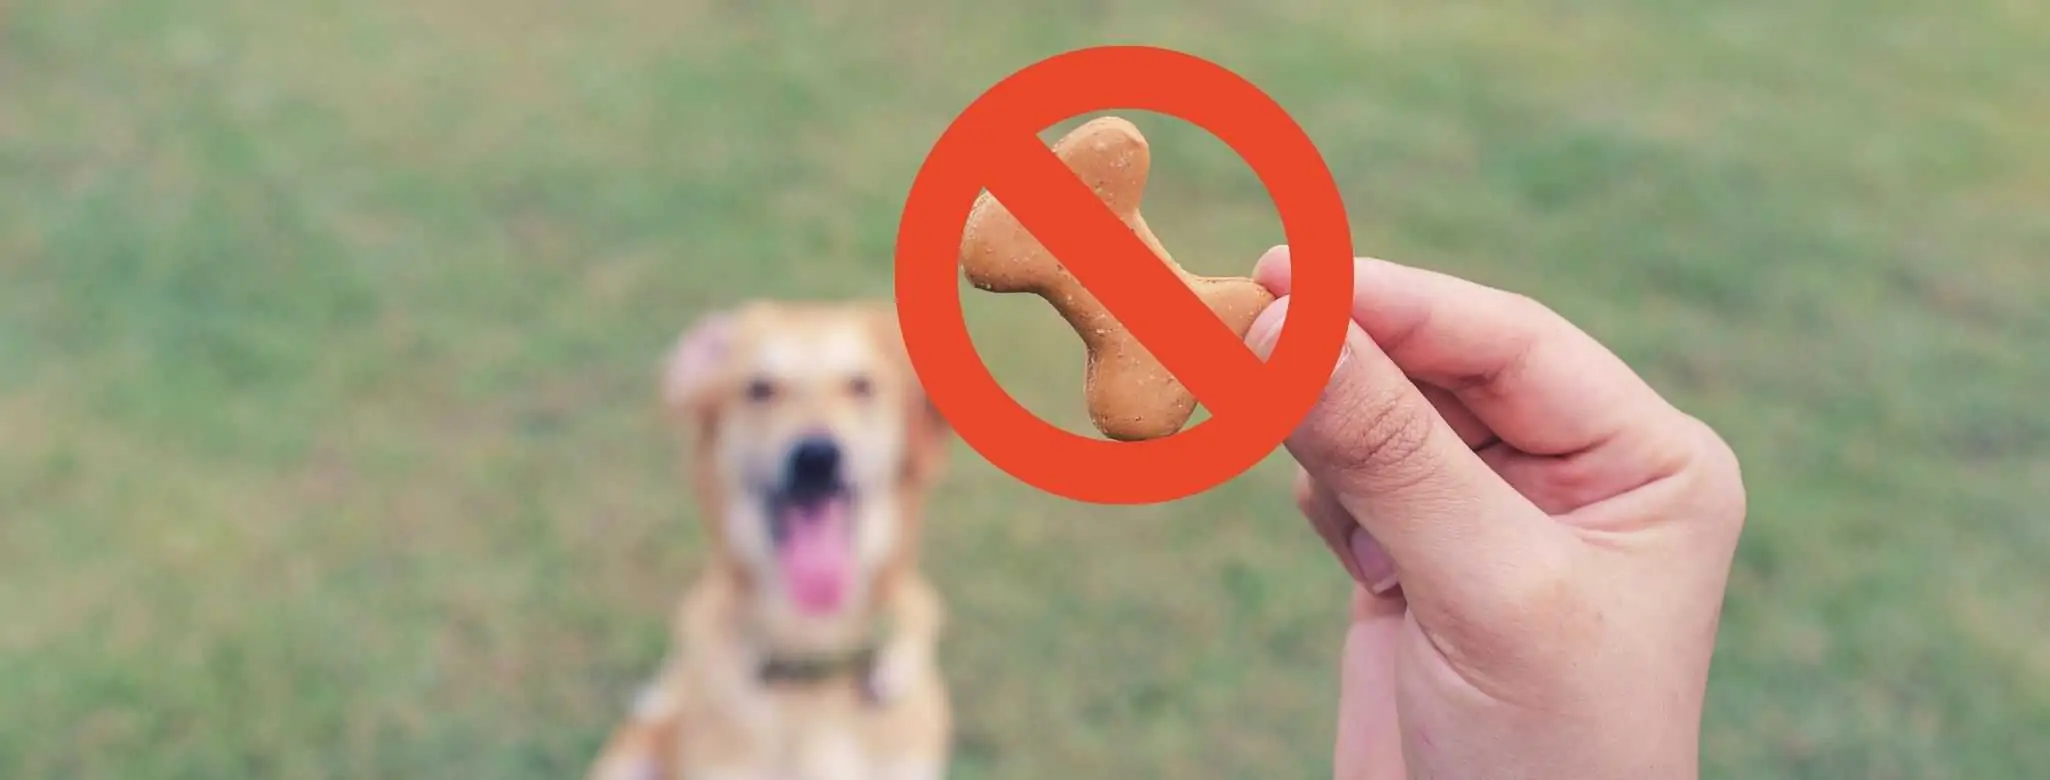 worst dog treats you should avoid